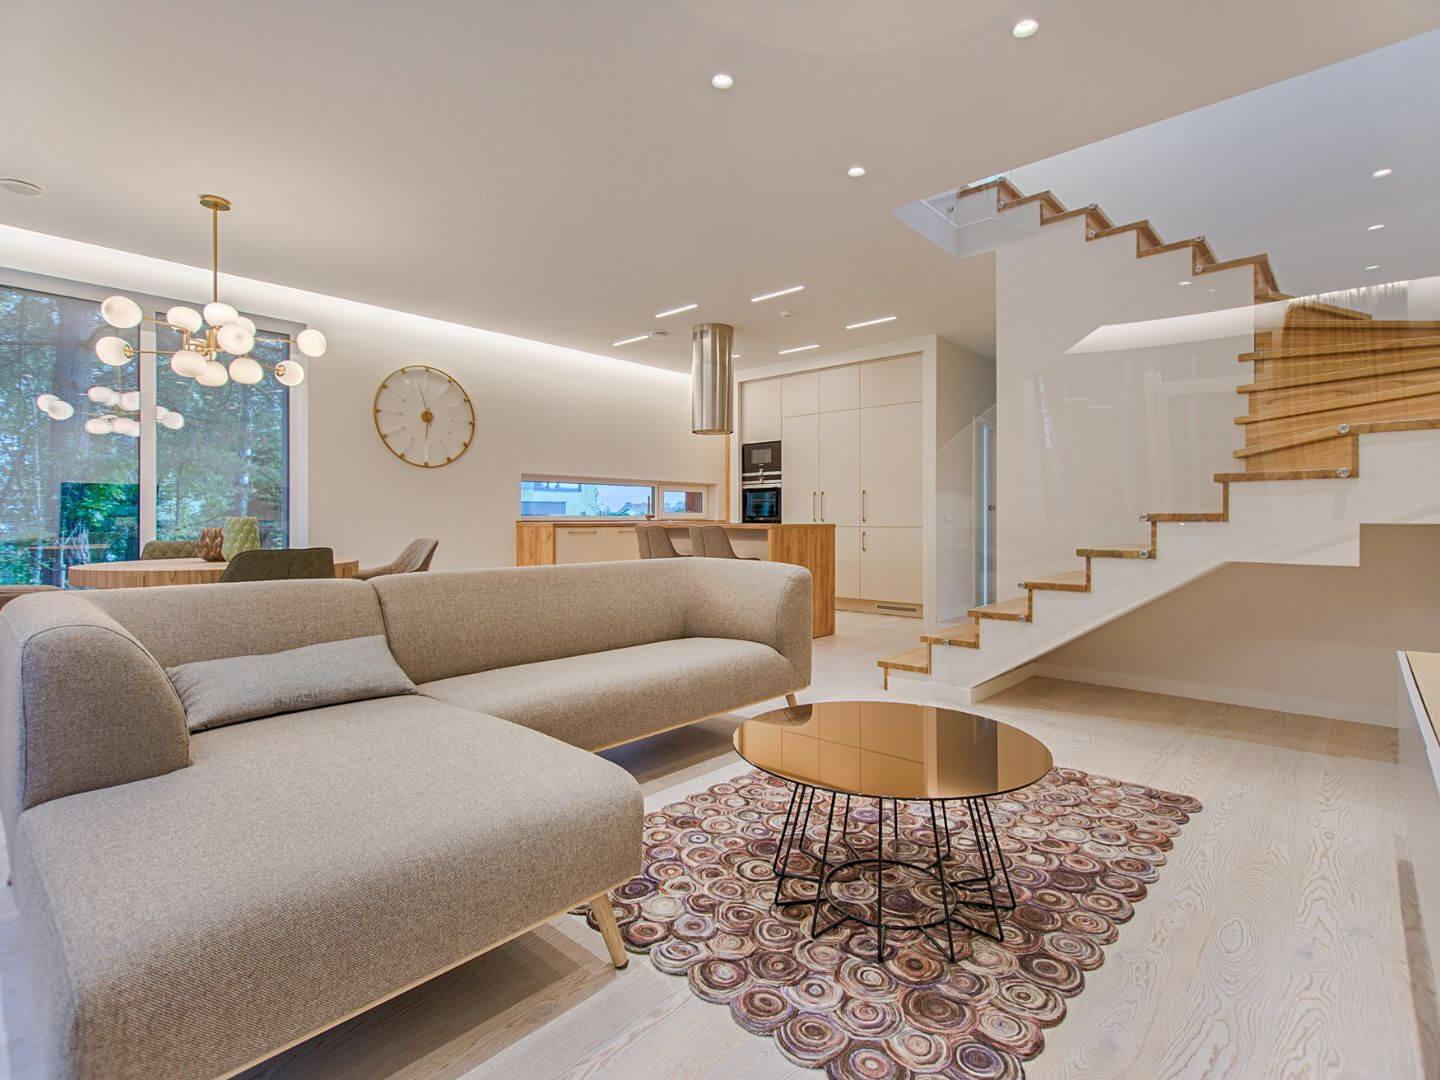 Interior Design Home